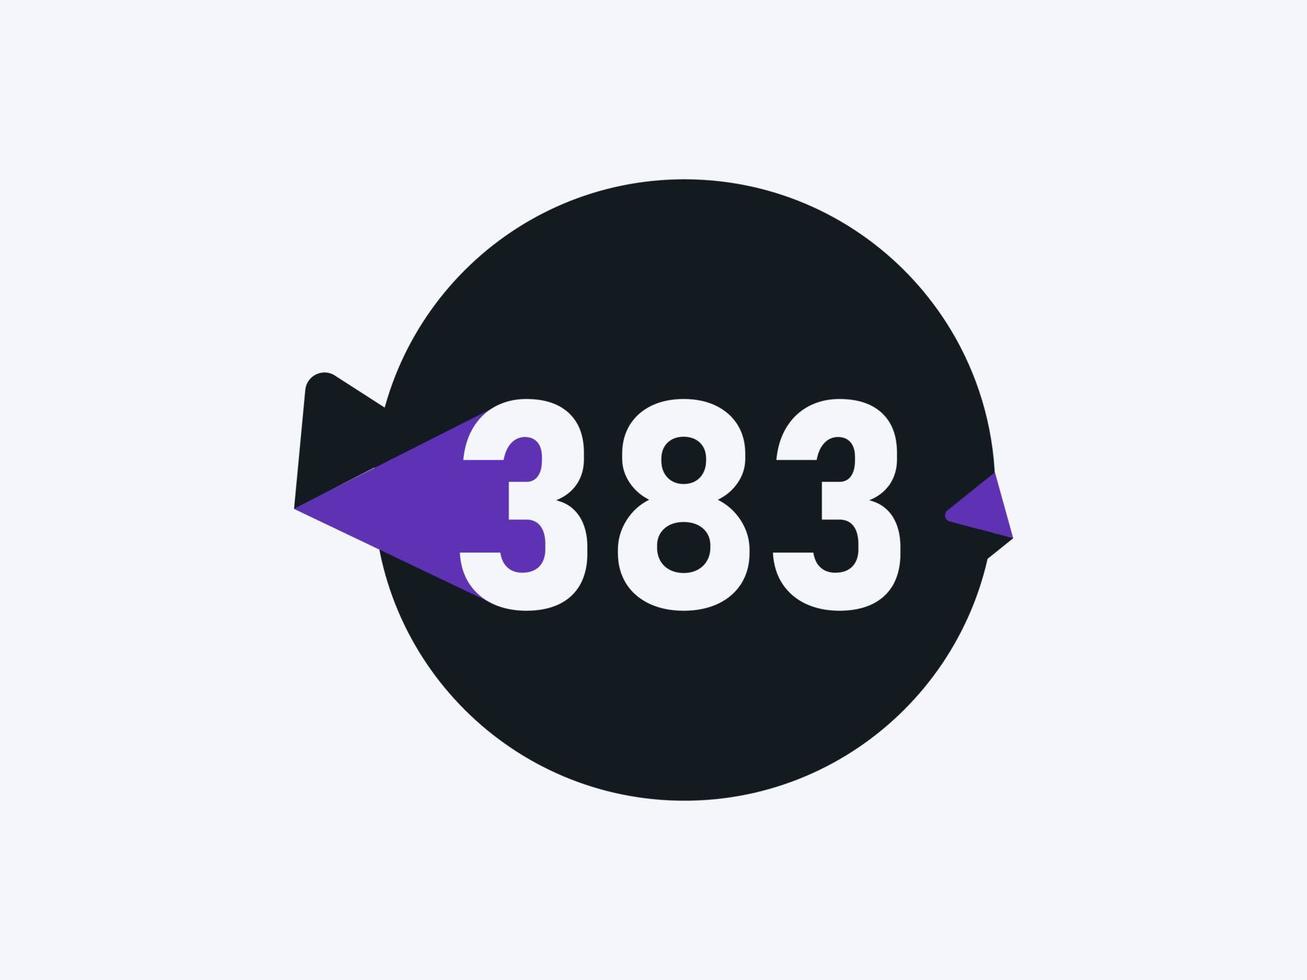 383 Number logo icon design vector image. Number logo icon design vector image